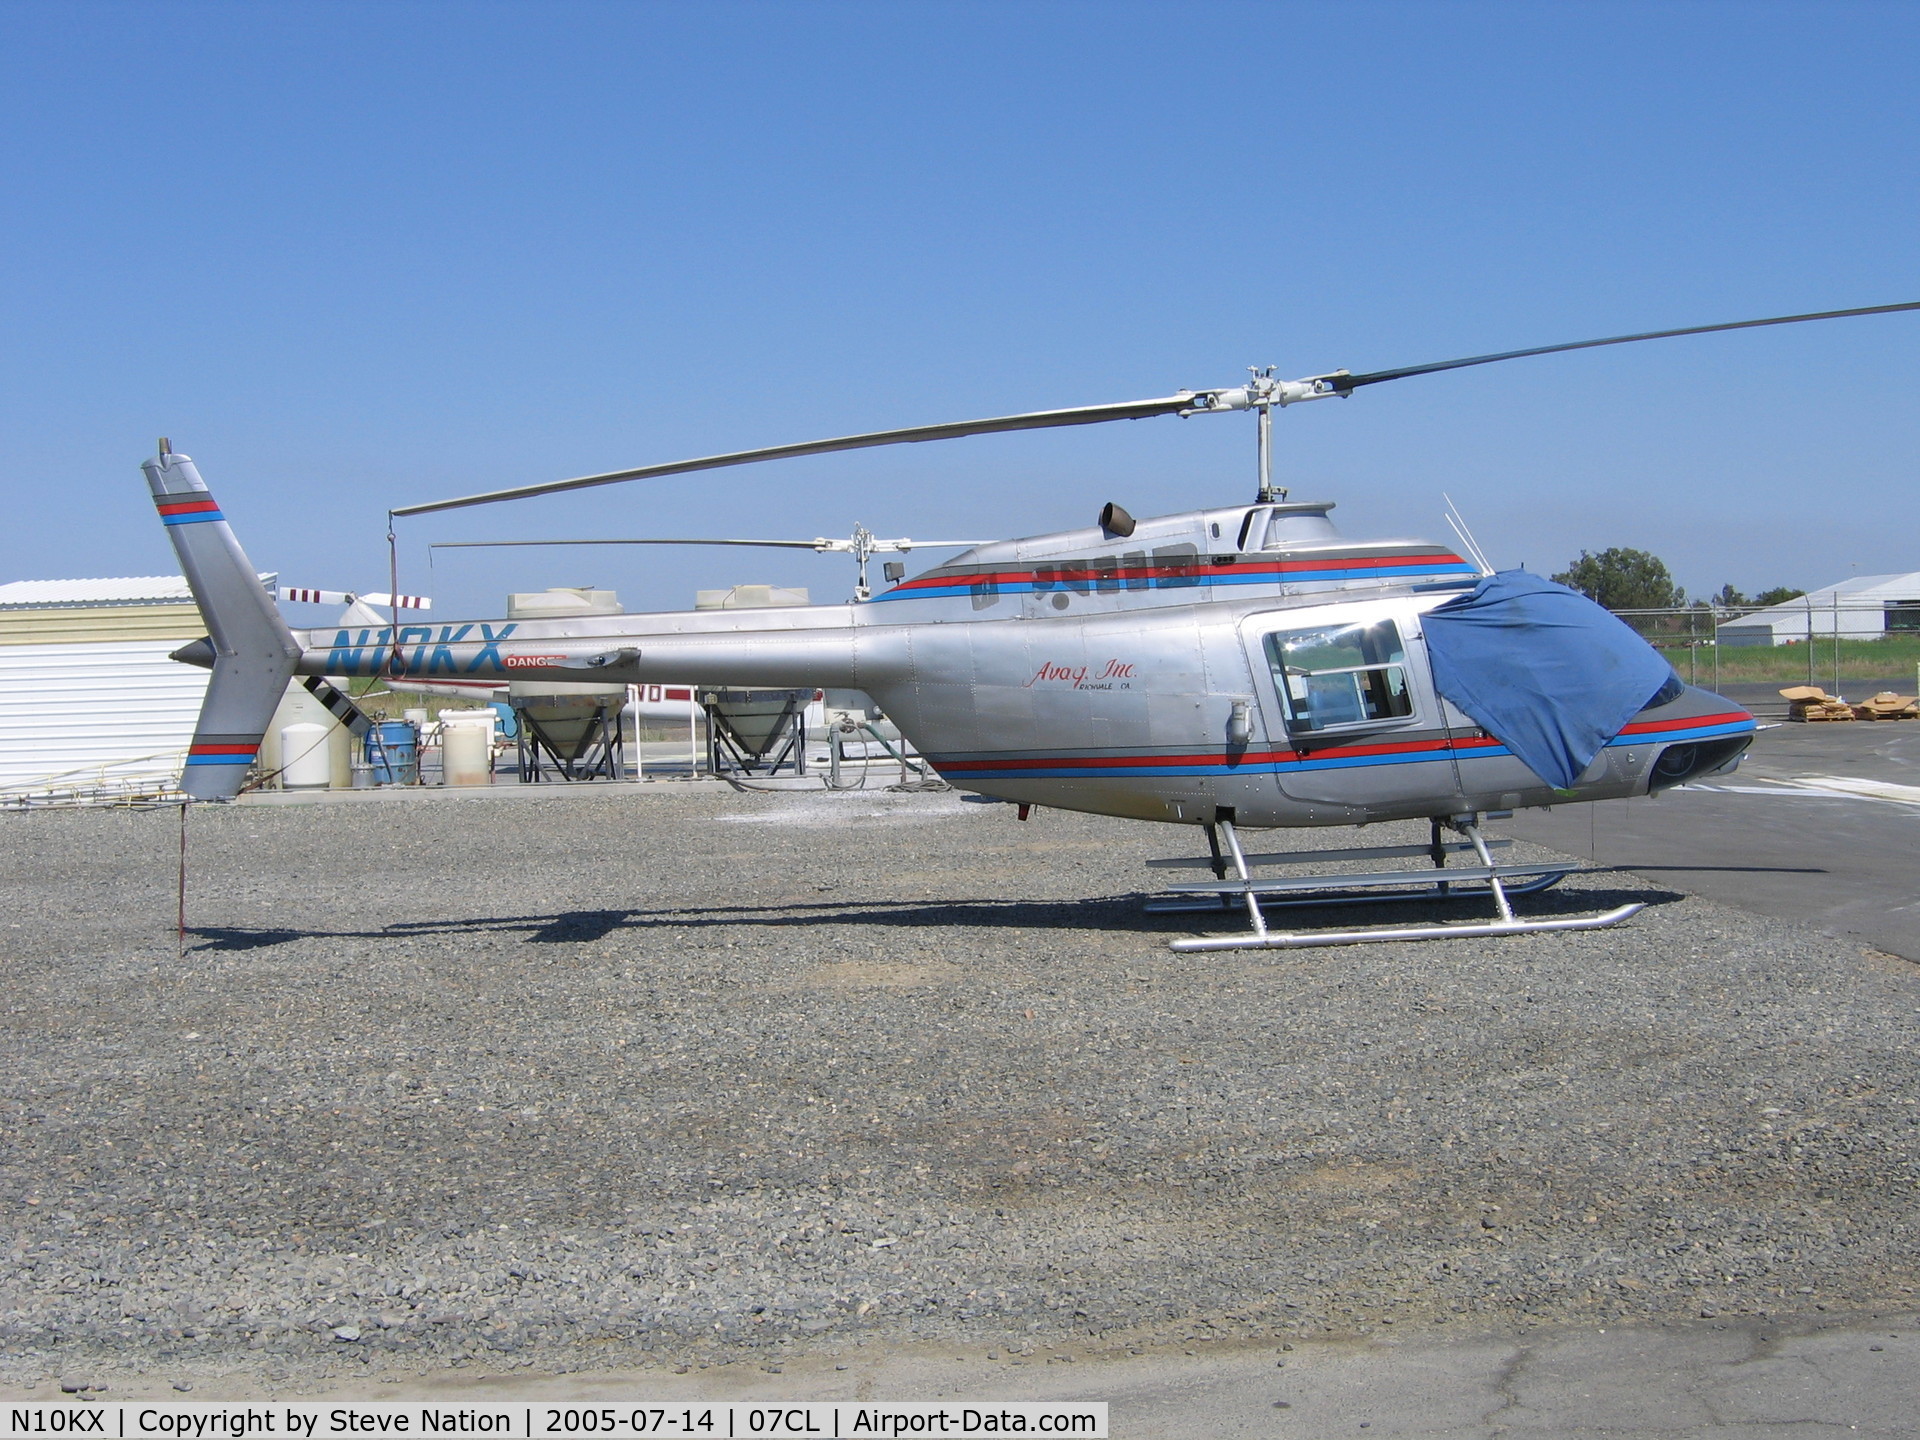 N10KX, 1975 Bell 206B JetRanger II C/N 1628, Av Ag Inc. 1975 Bell 206B powerline patrol helo at their Richvale, CA base